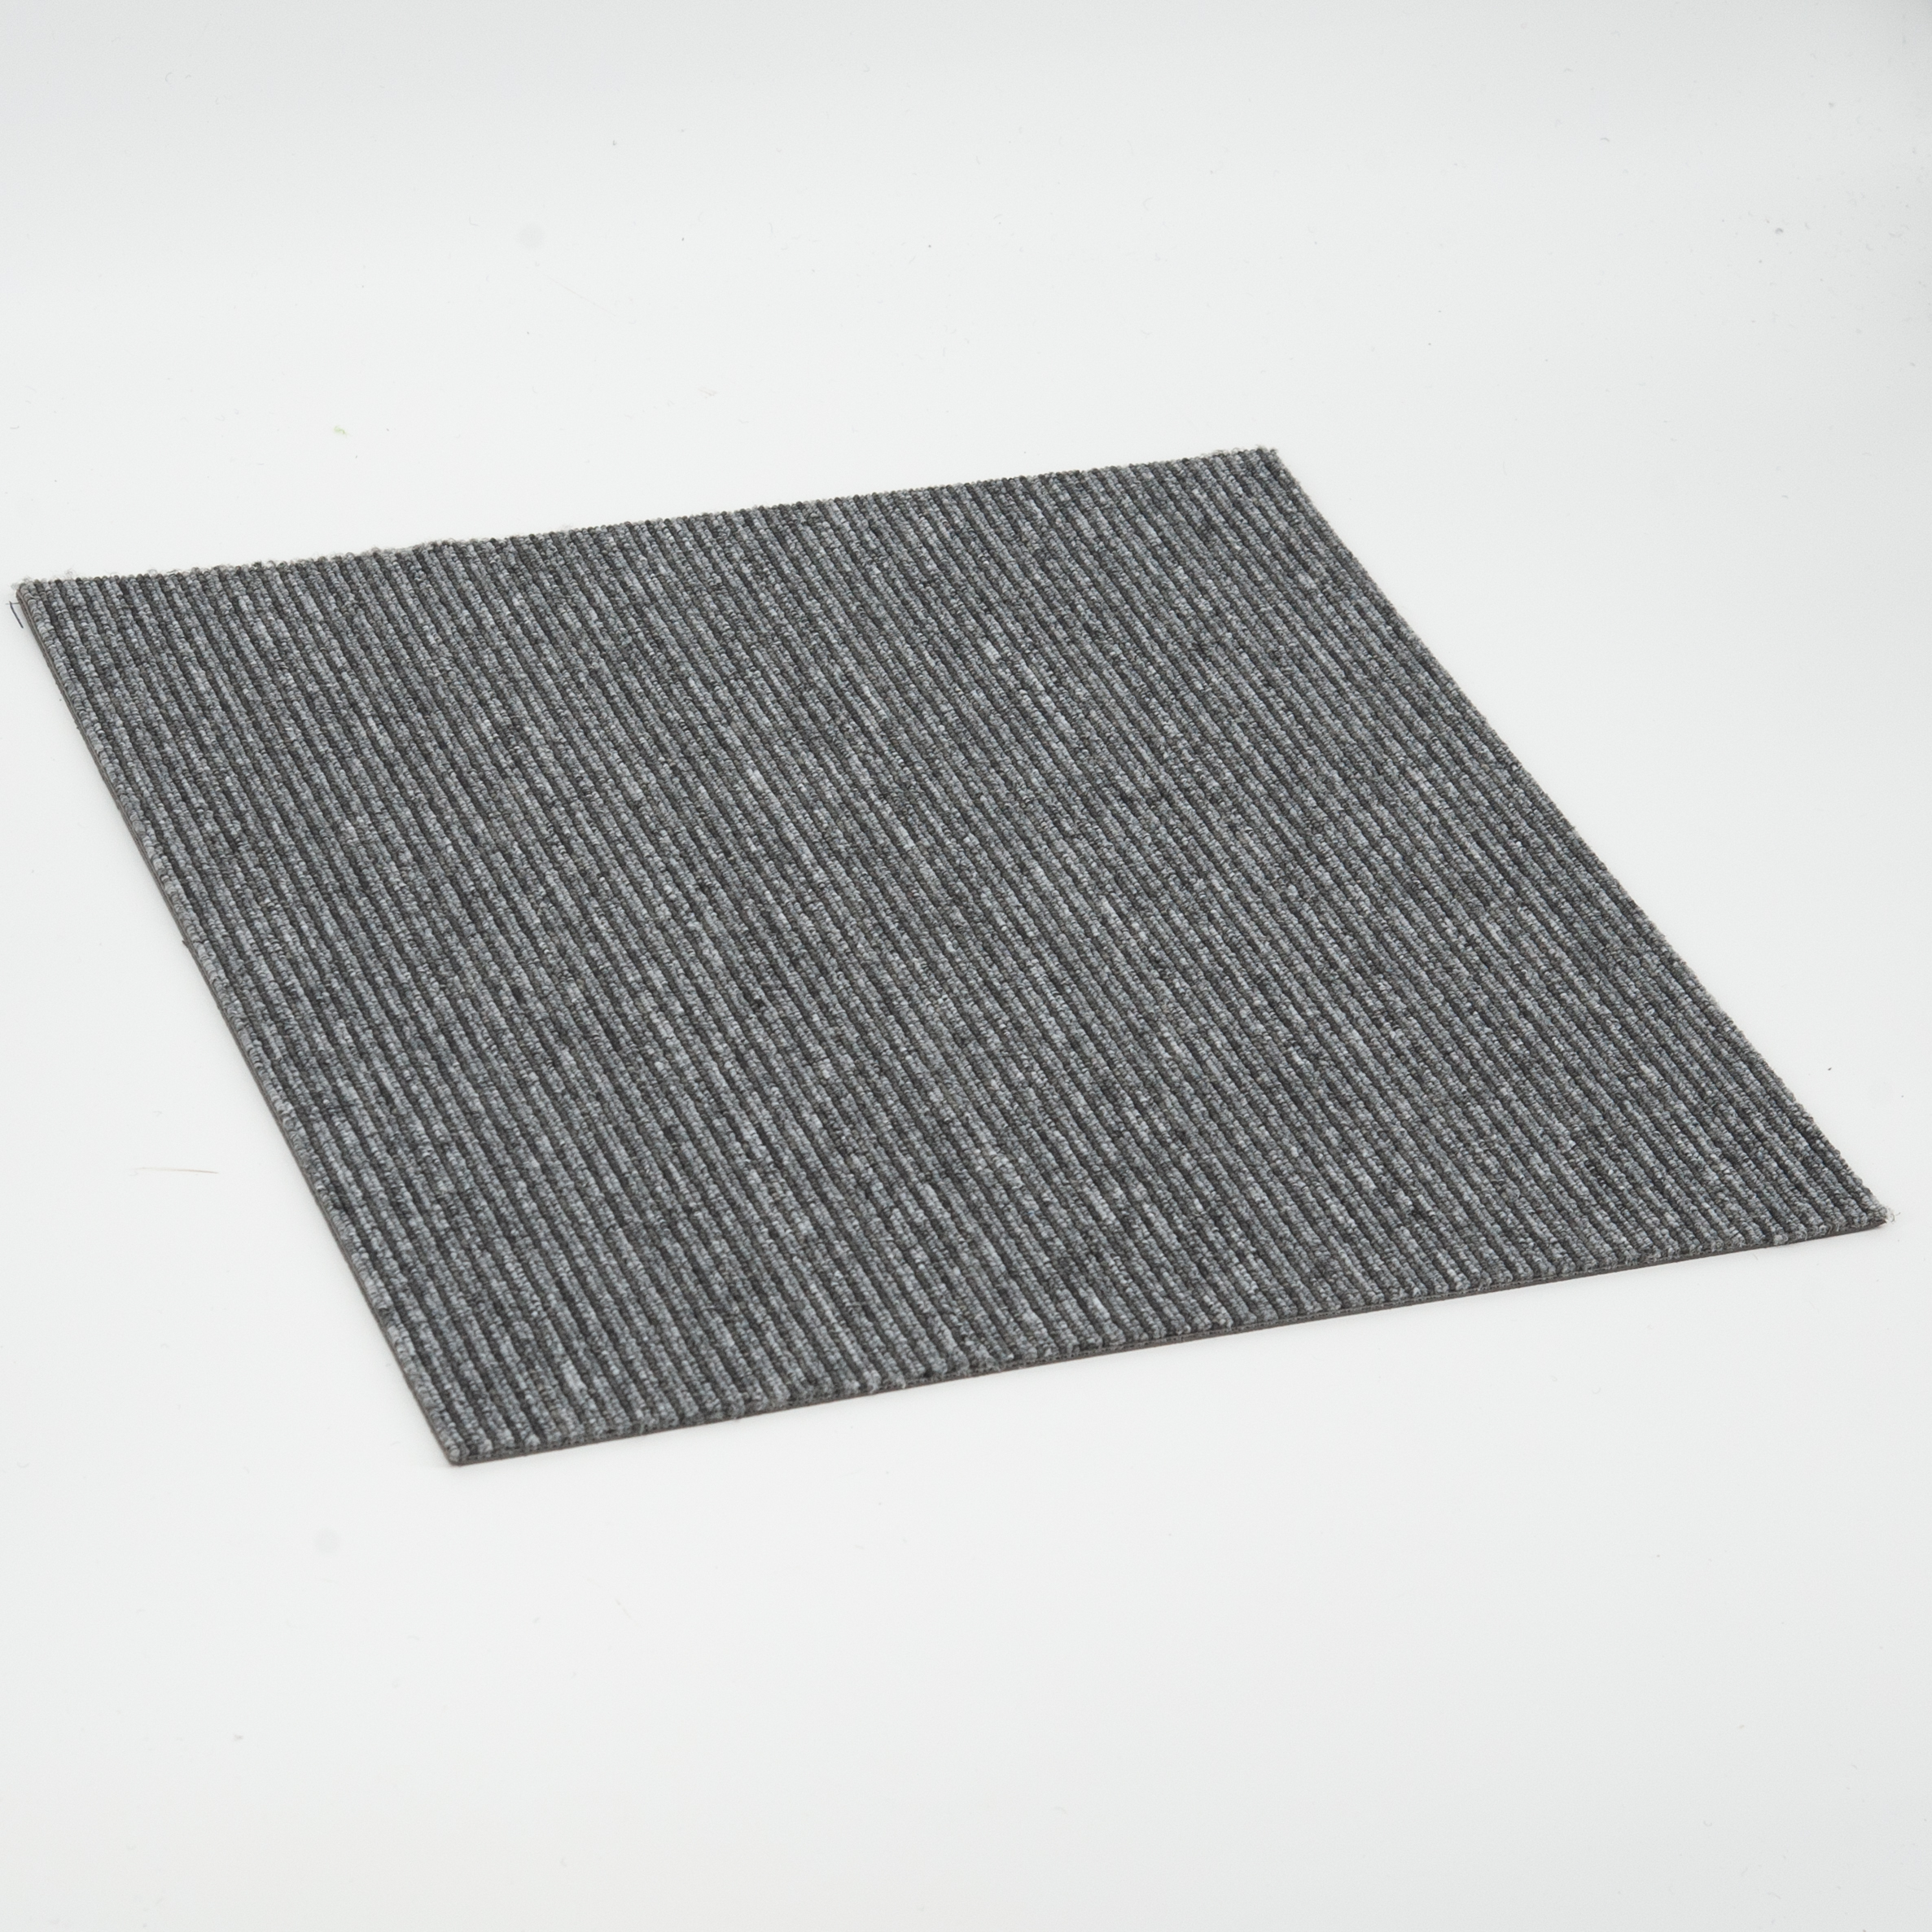 Thick Self Adhesive Soft Carpet Tiles